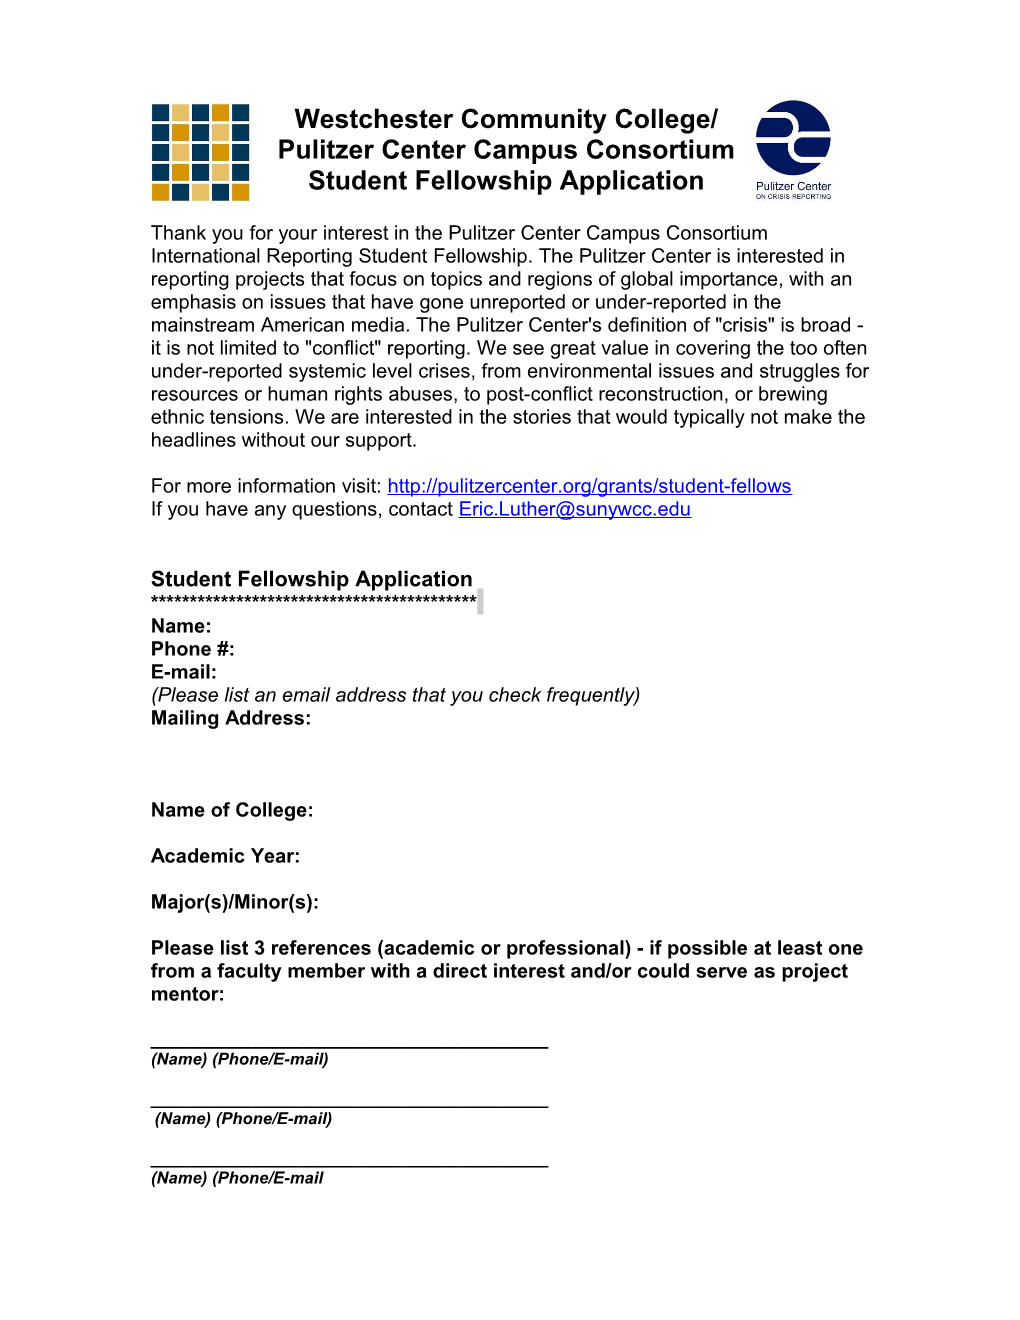 Student Fellowship Application